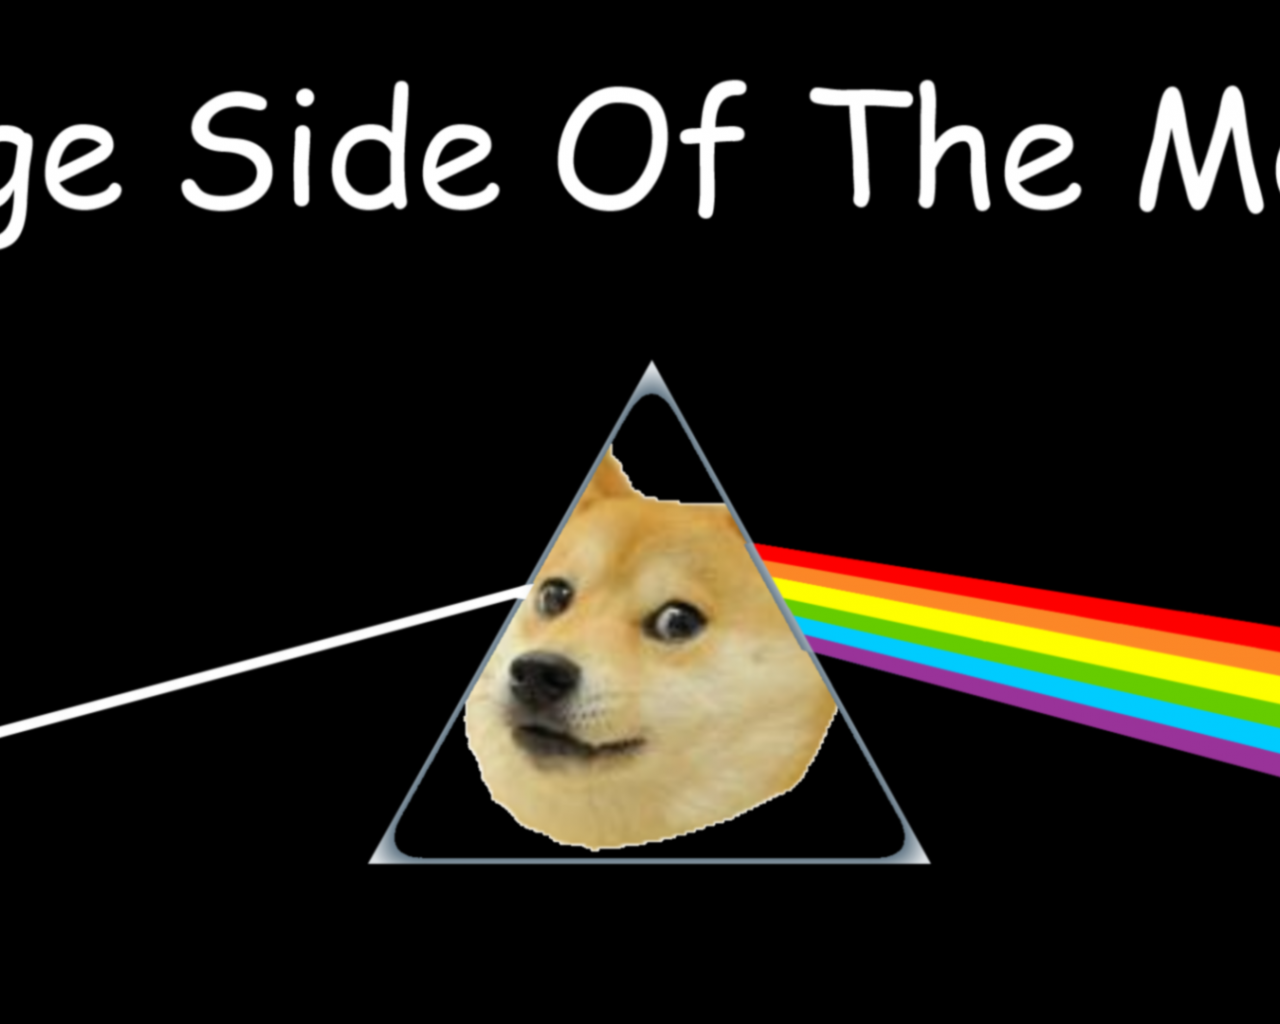 Free download Doge Meme Wallpaper 1920x1080 Doge side of the moon